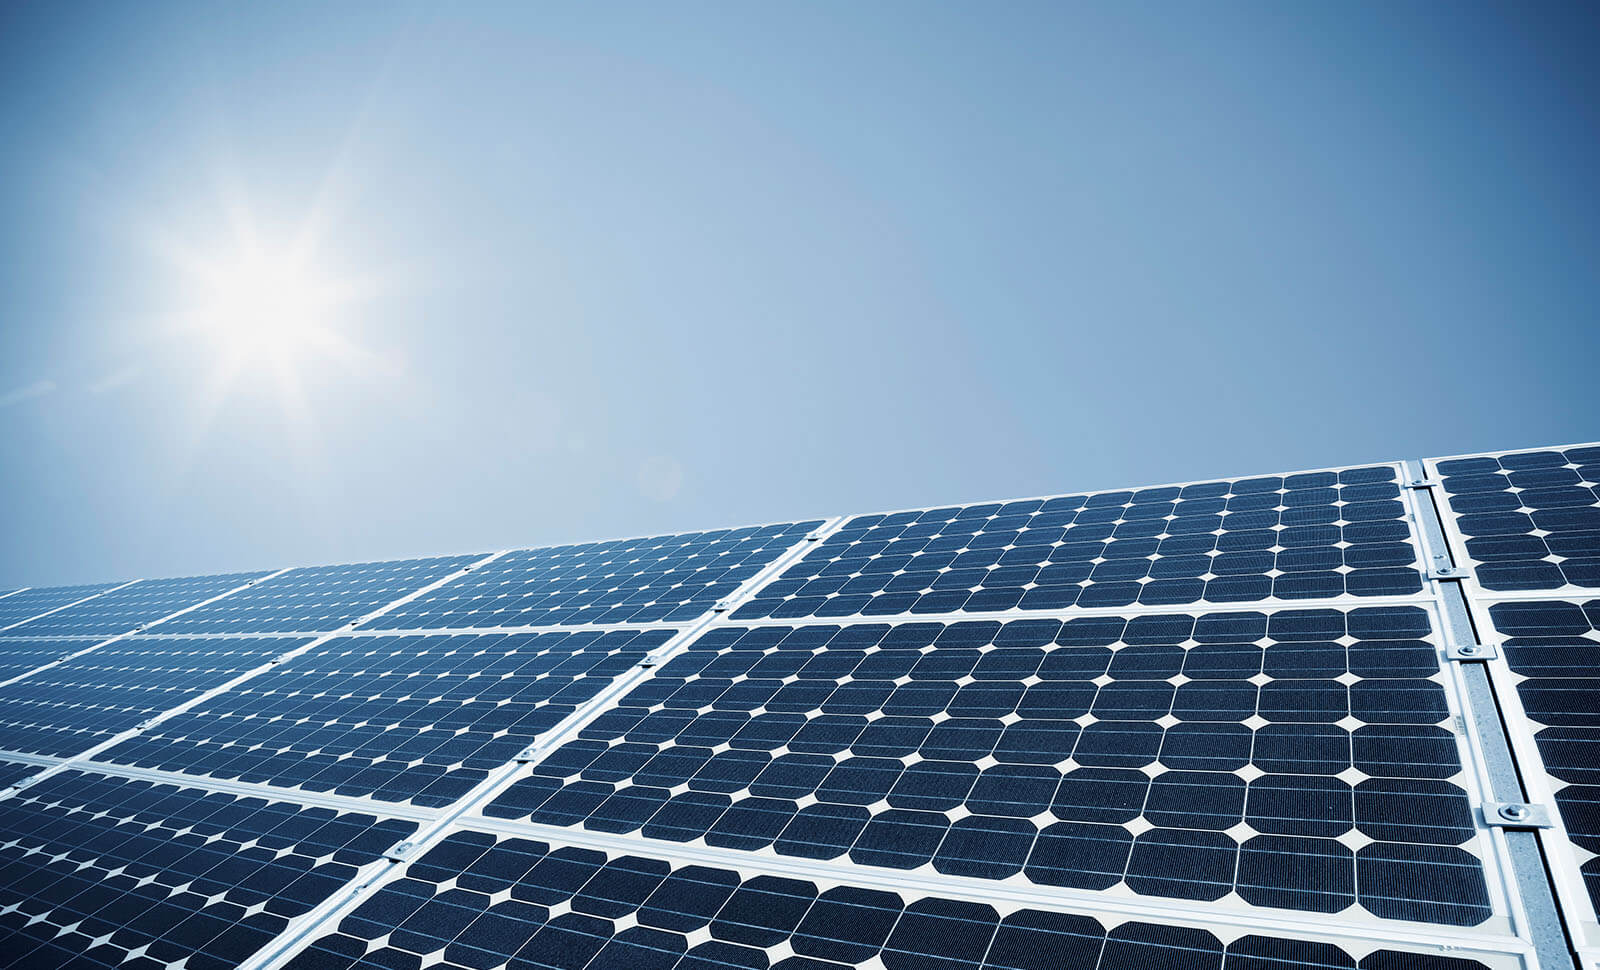 HDO uses solar energy